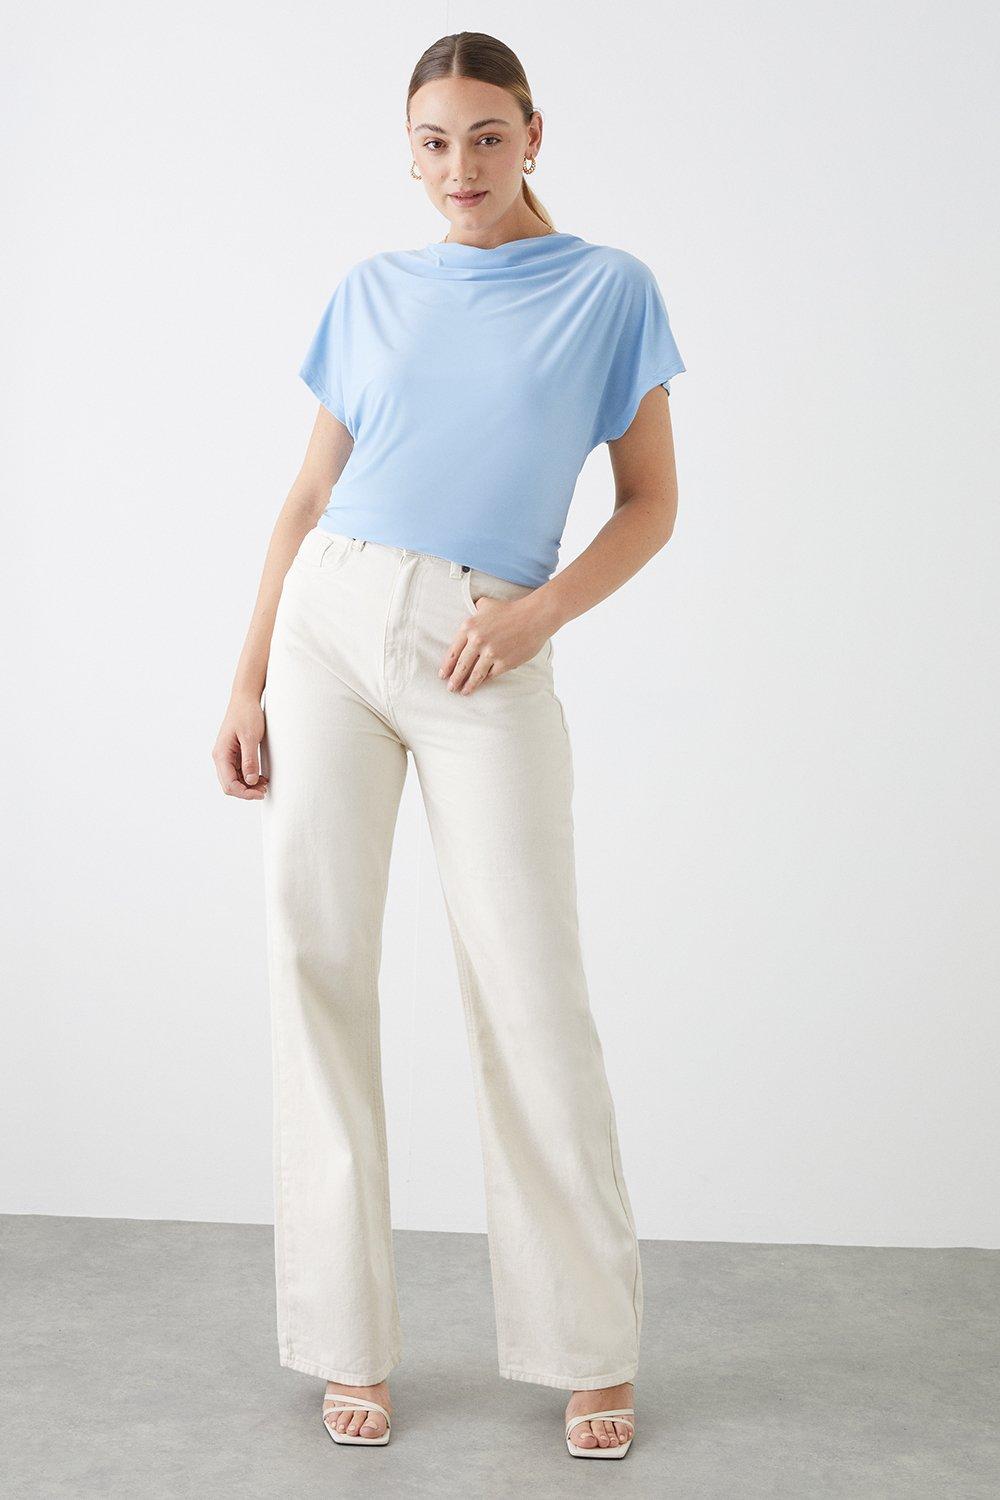 Women's Tall Cowl Neck Short Sleeve Blouse - blue - 10